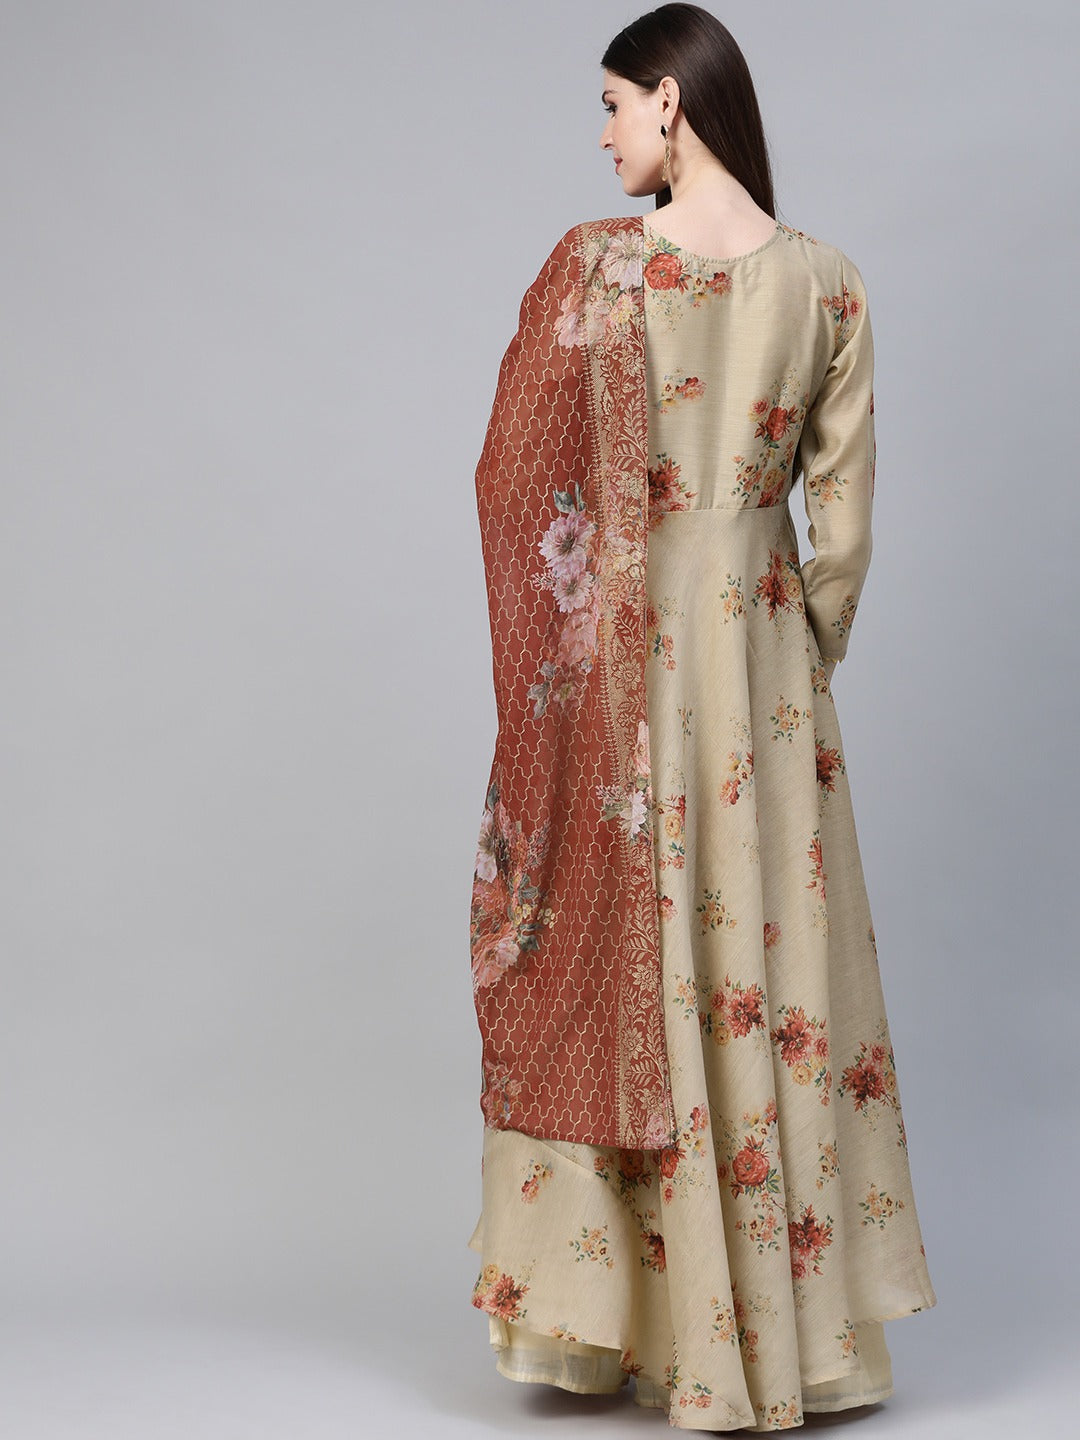 Beige & Brown Floral Printed Anarkali Kurta Dress with Dupatta